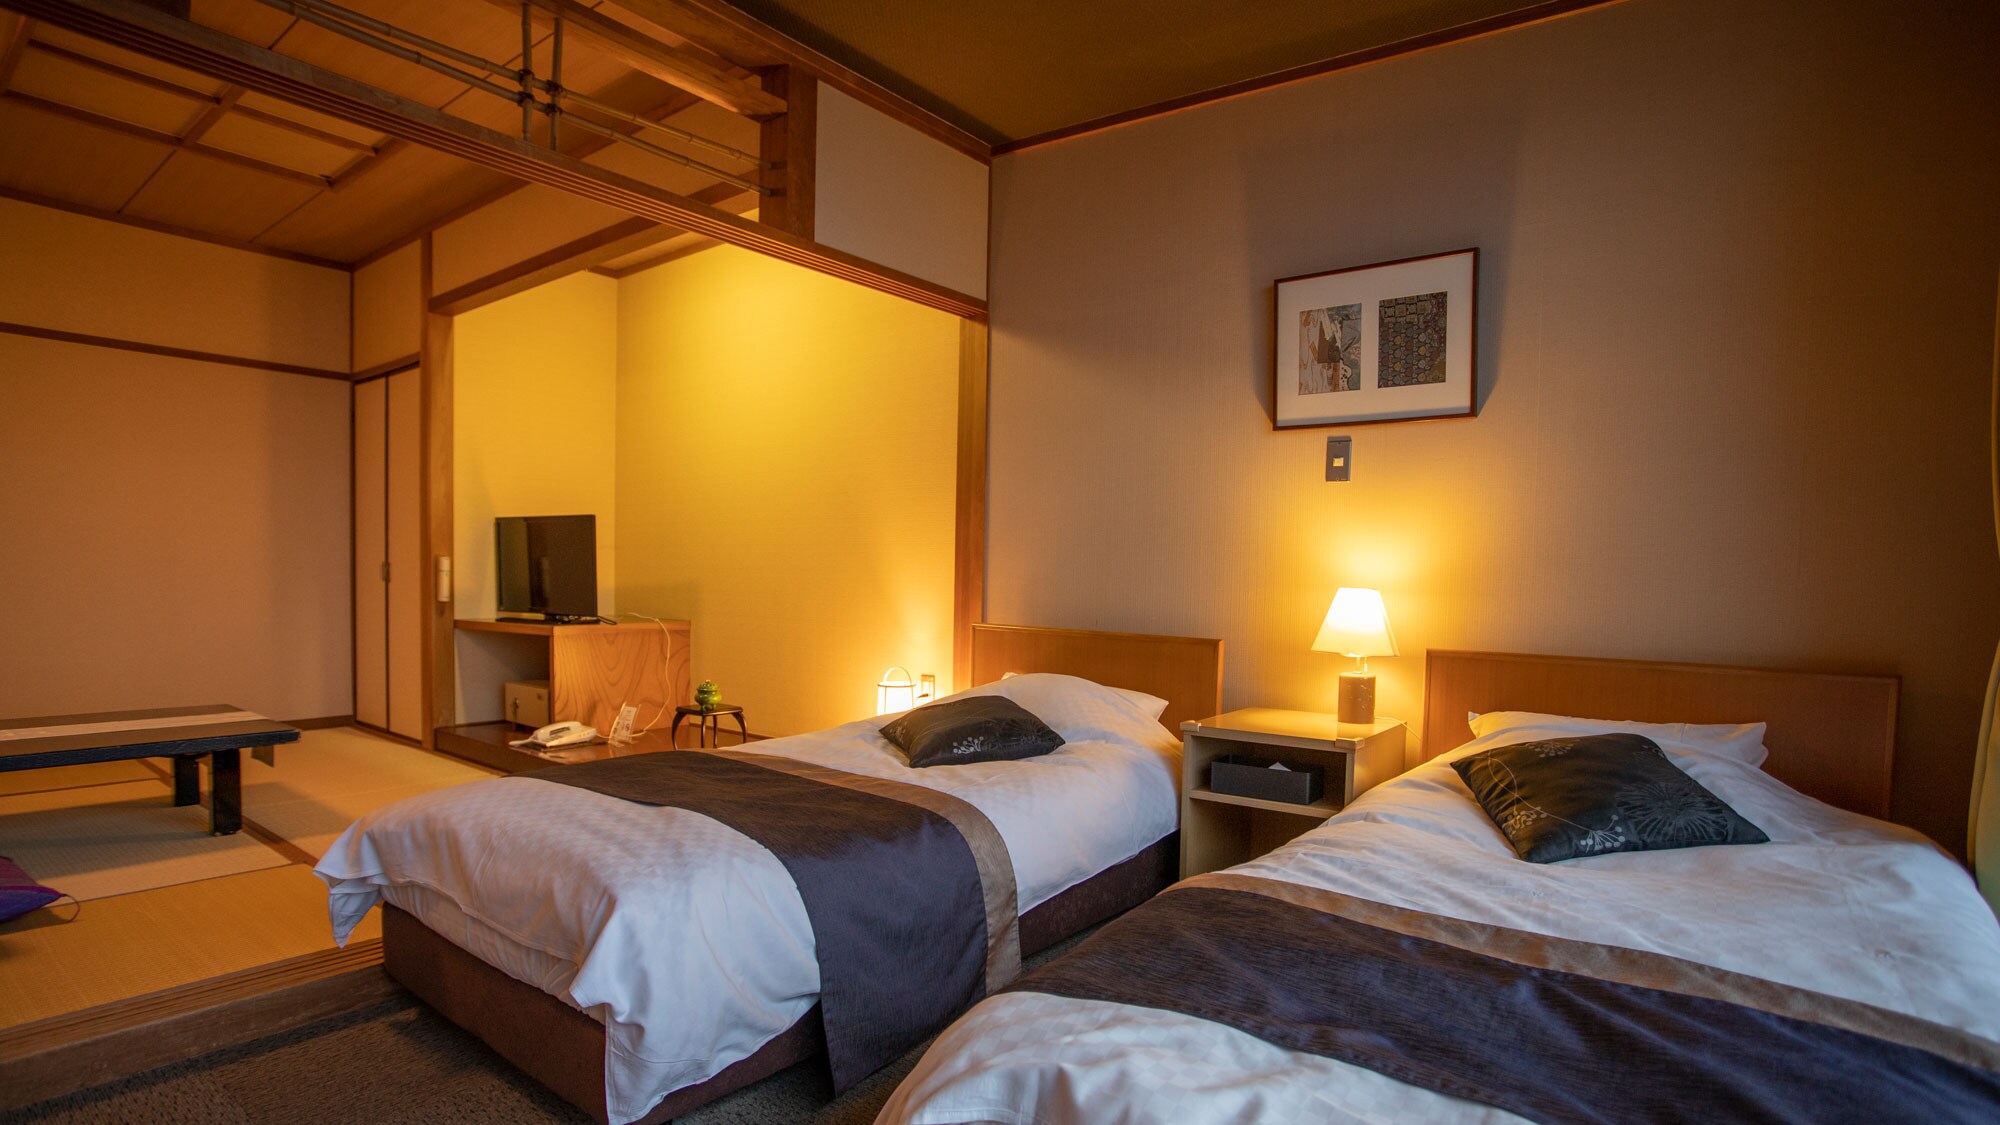 Kamar bergaya Jepang-Barat yang memadukan ketenangan penginapan Jepang dengan kenyamanan sebuah hotel. Kamar meja tinggi juga tersedia, jadi tolong